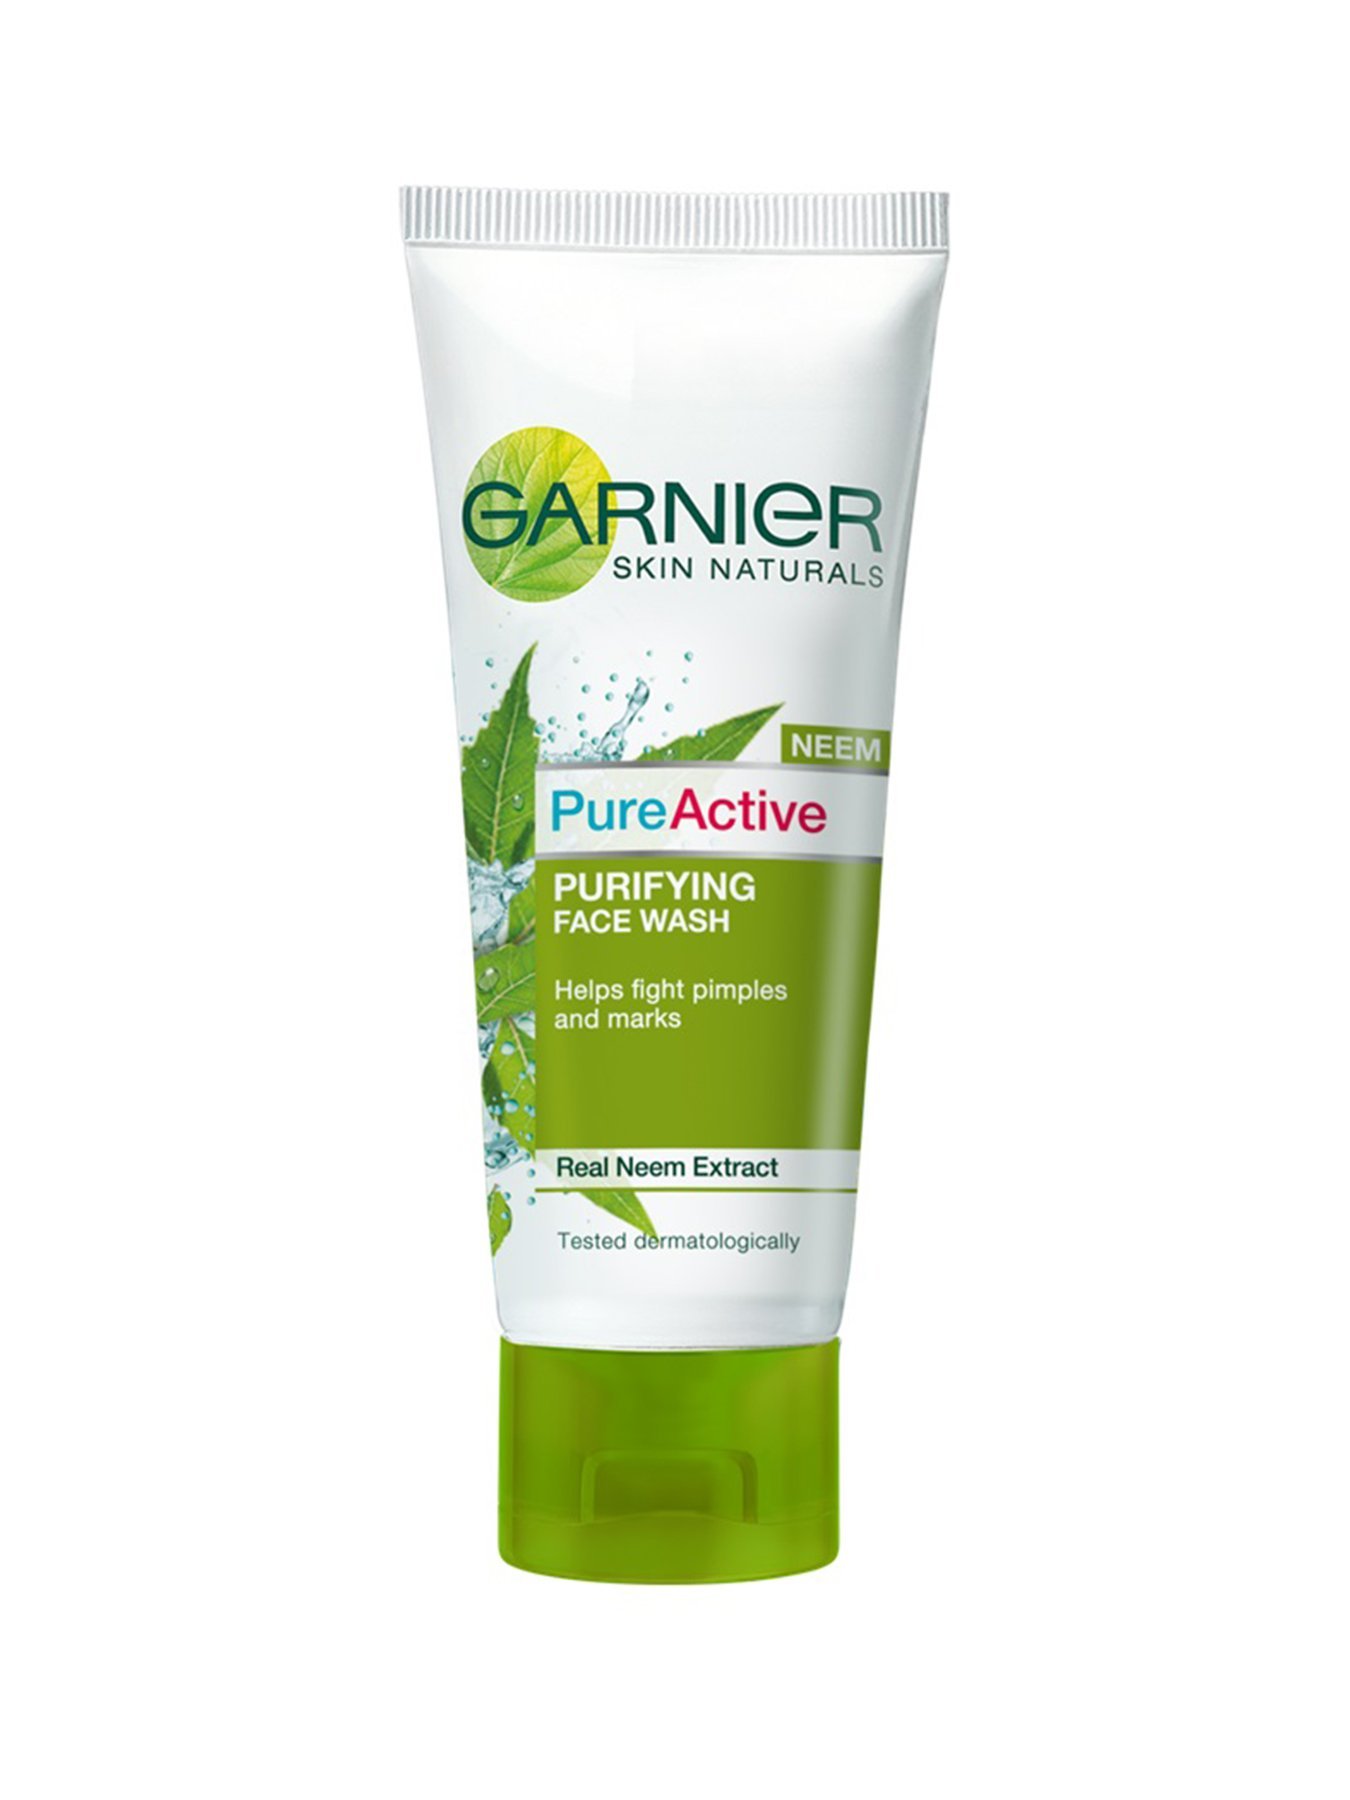 Garnier Pure Active Neem Face Wash 100g, Buy Online Price in India